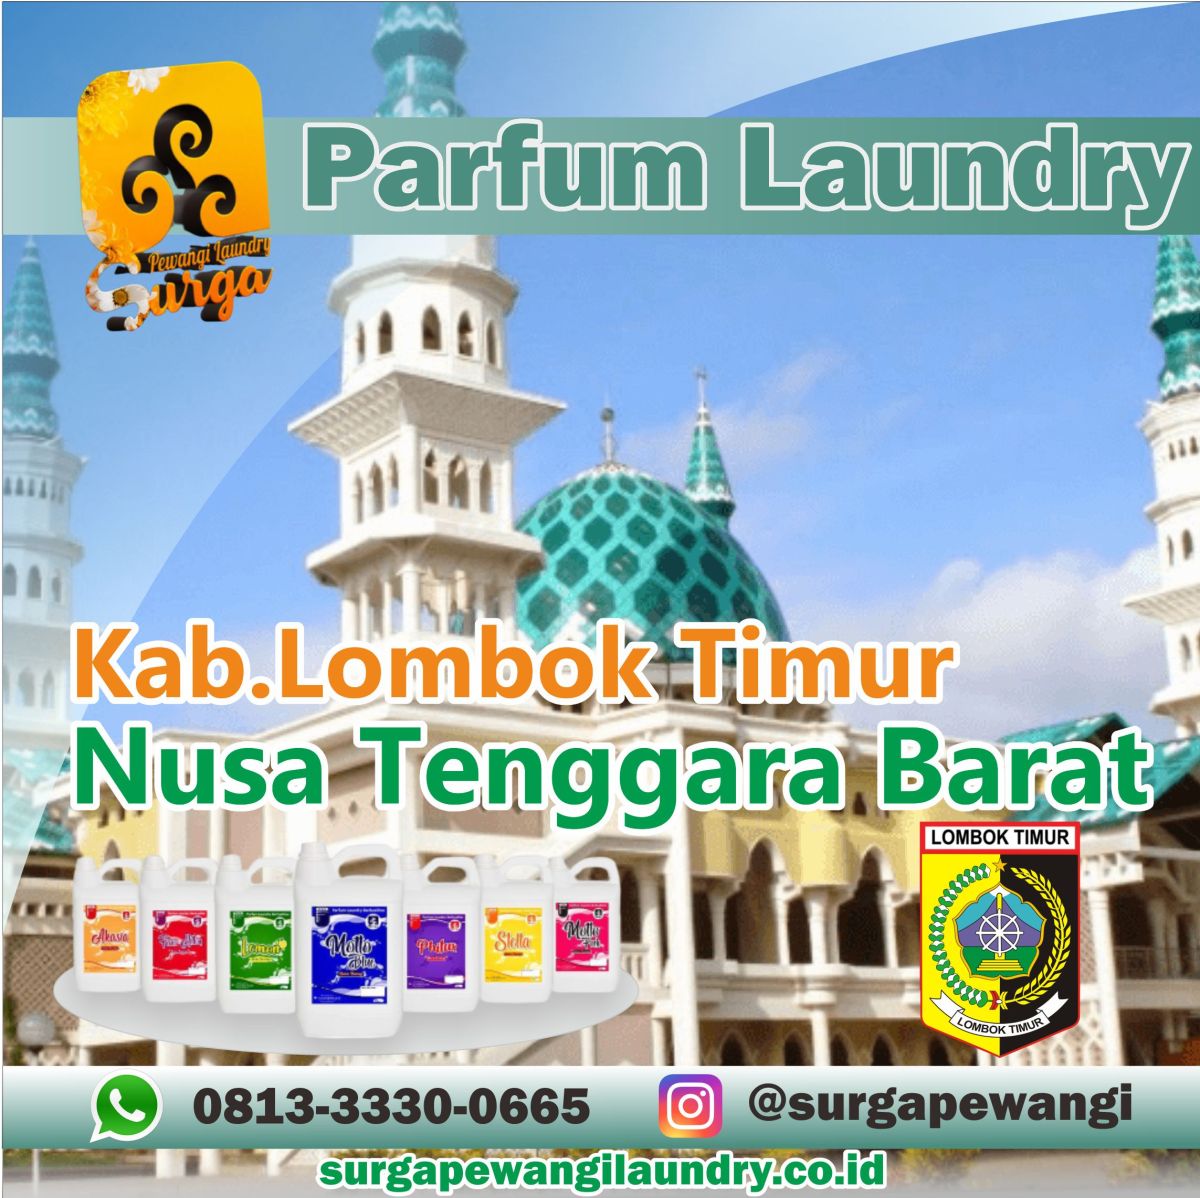 Parfum Laundry Kabupaten Lombok Timur, Nusa Tenggara Barat